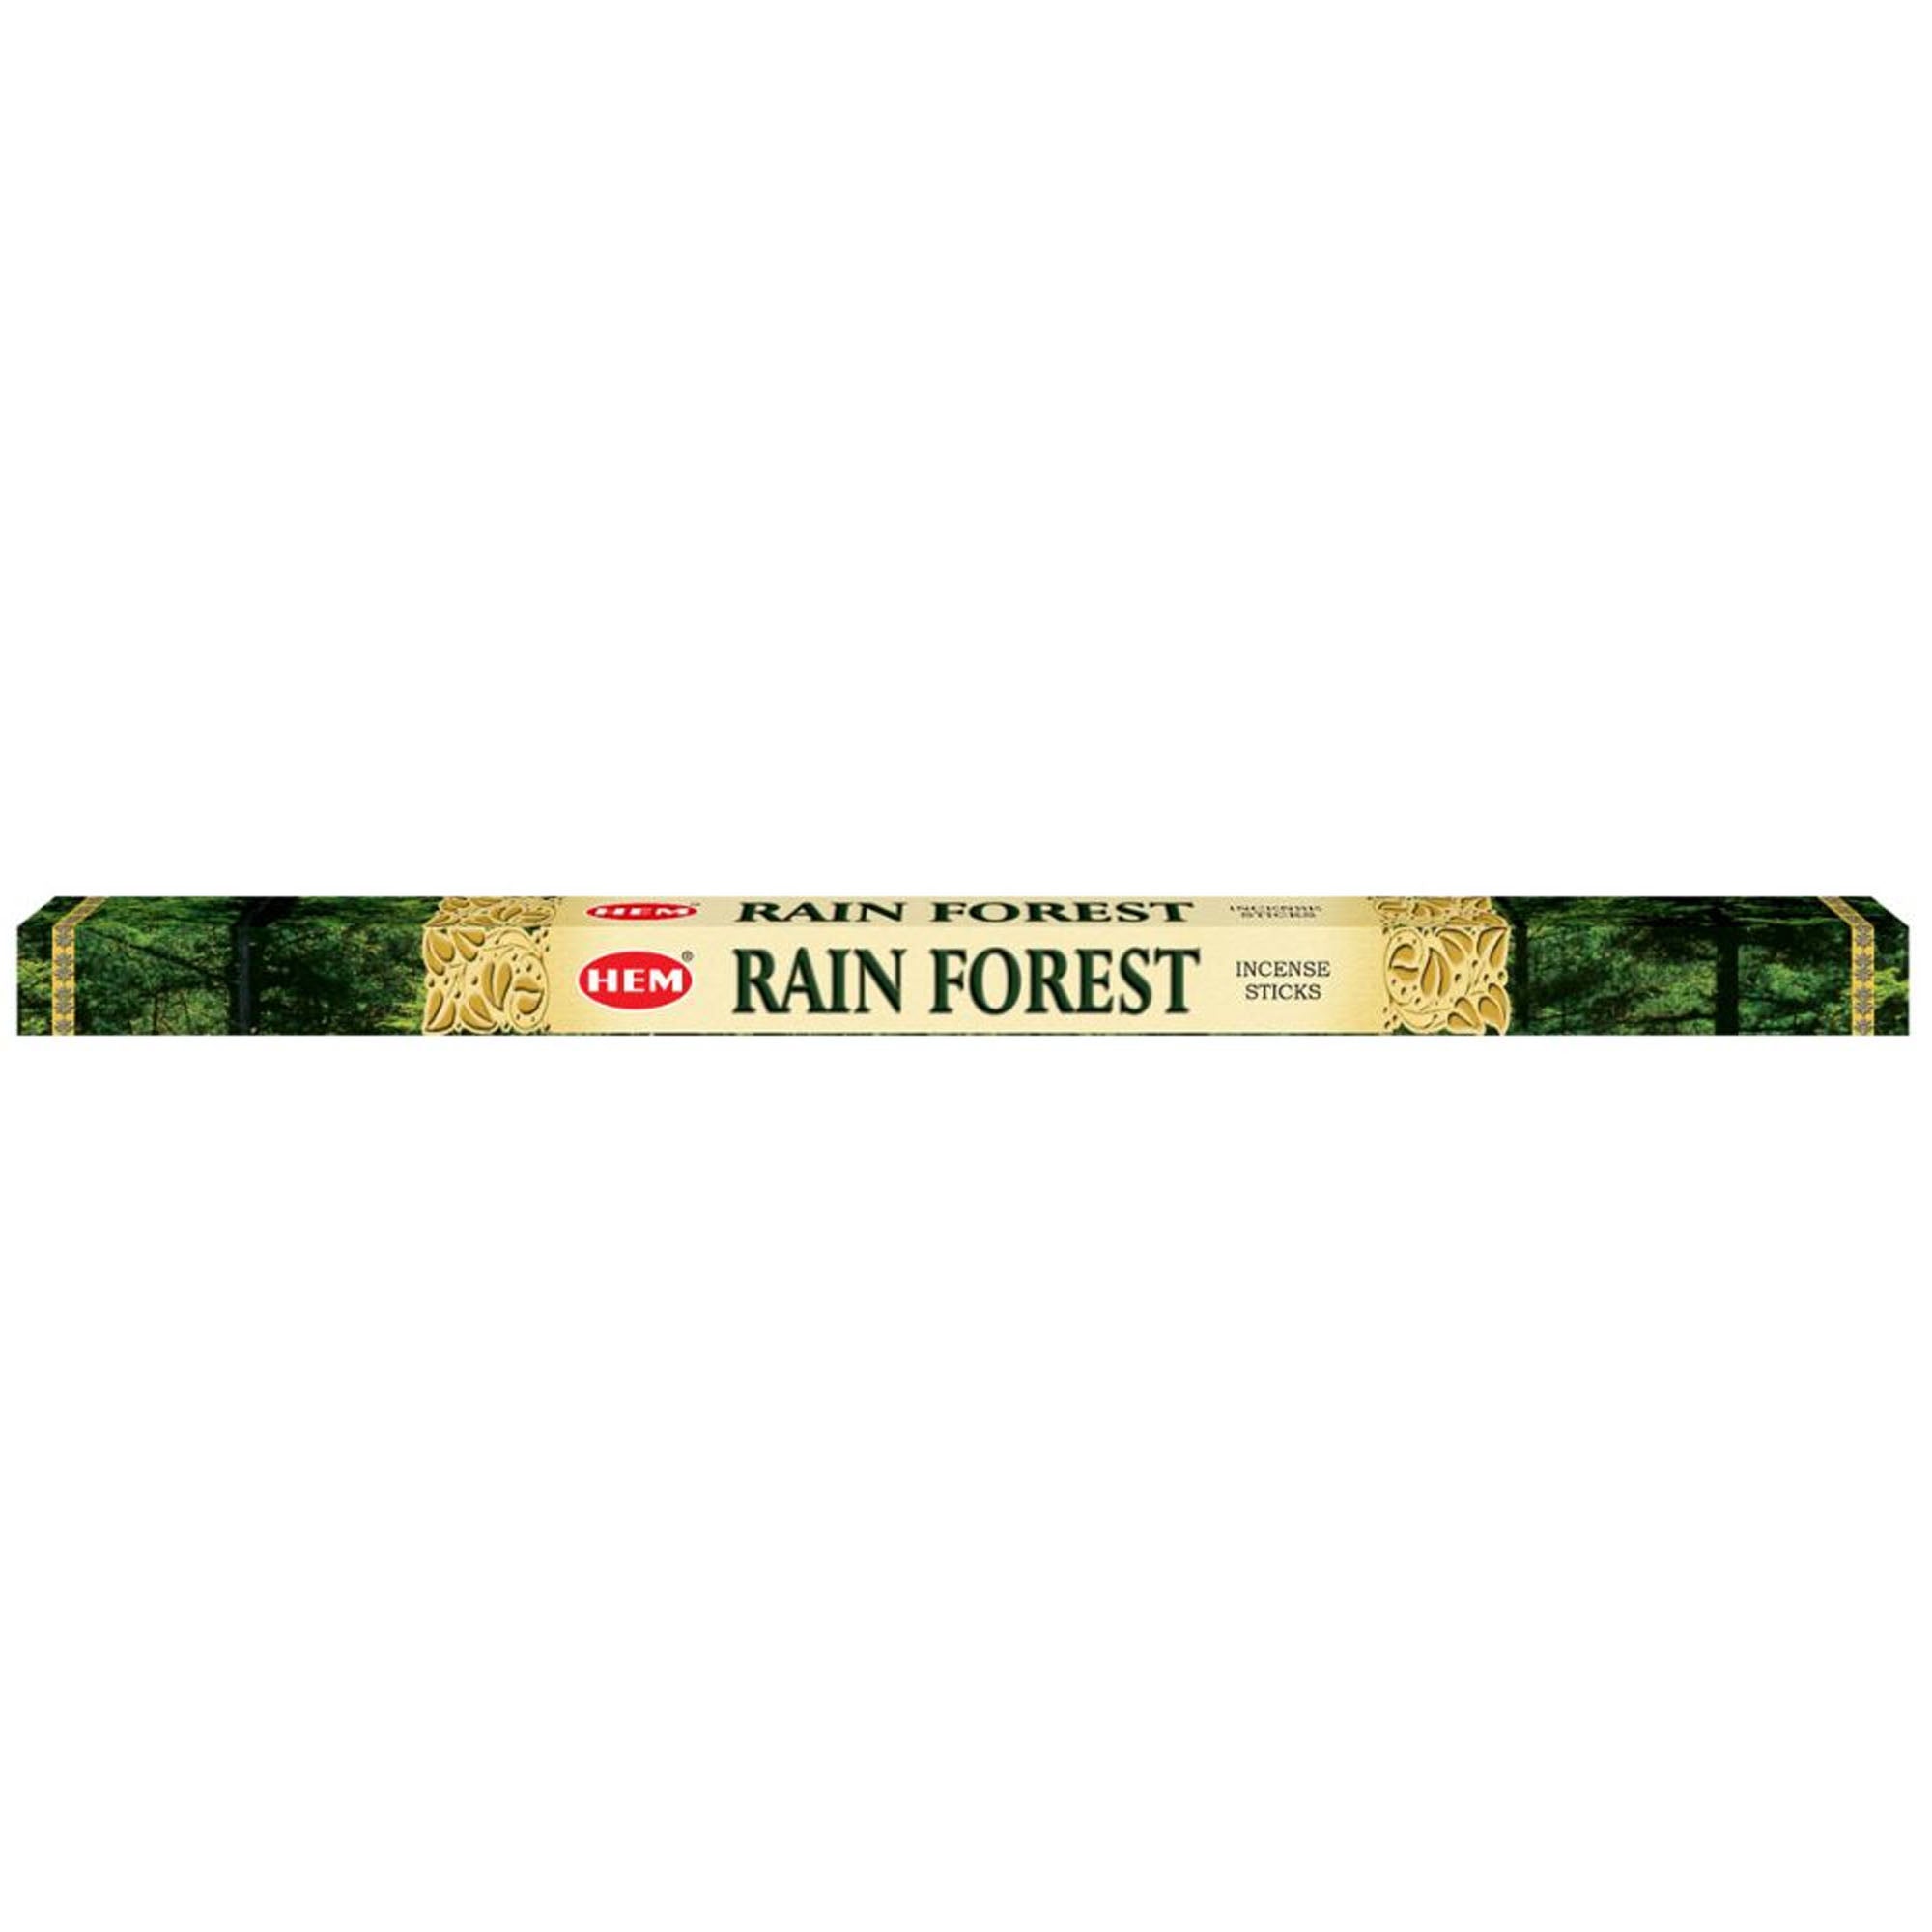 Hem - Square - Rain Forest Incense Sticks